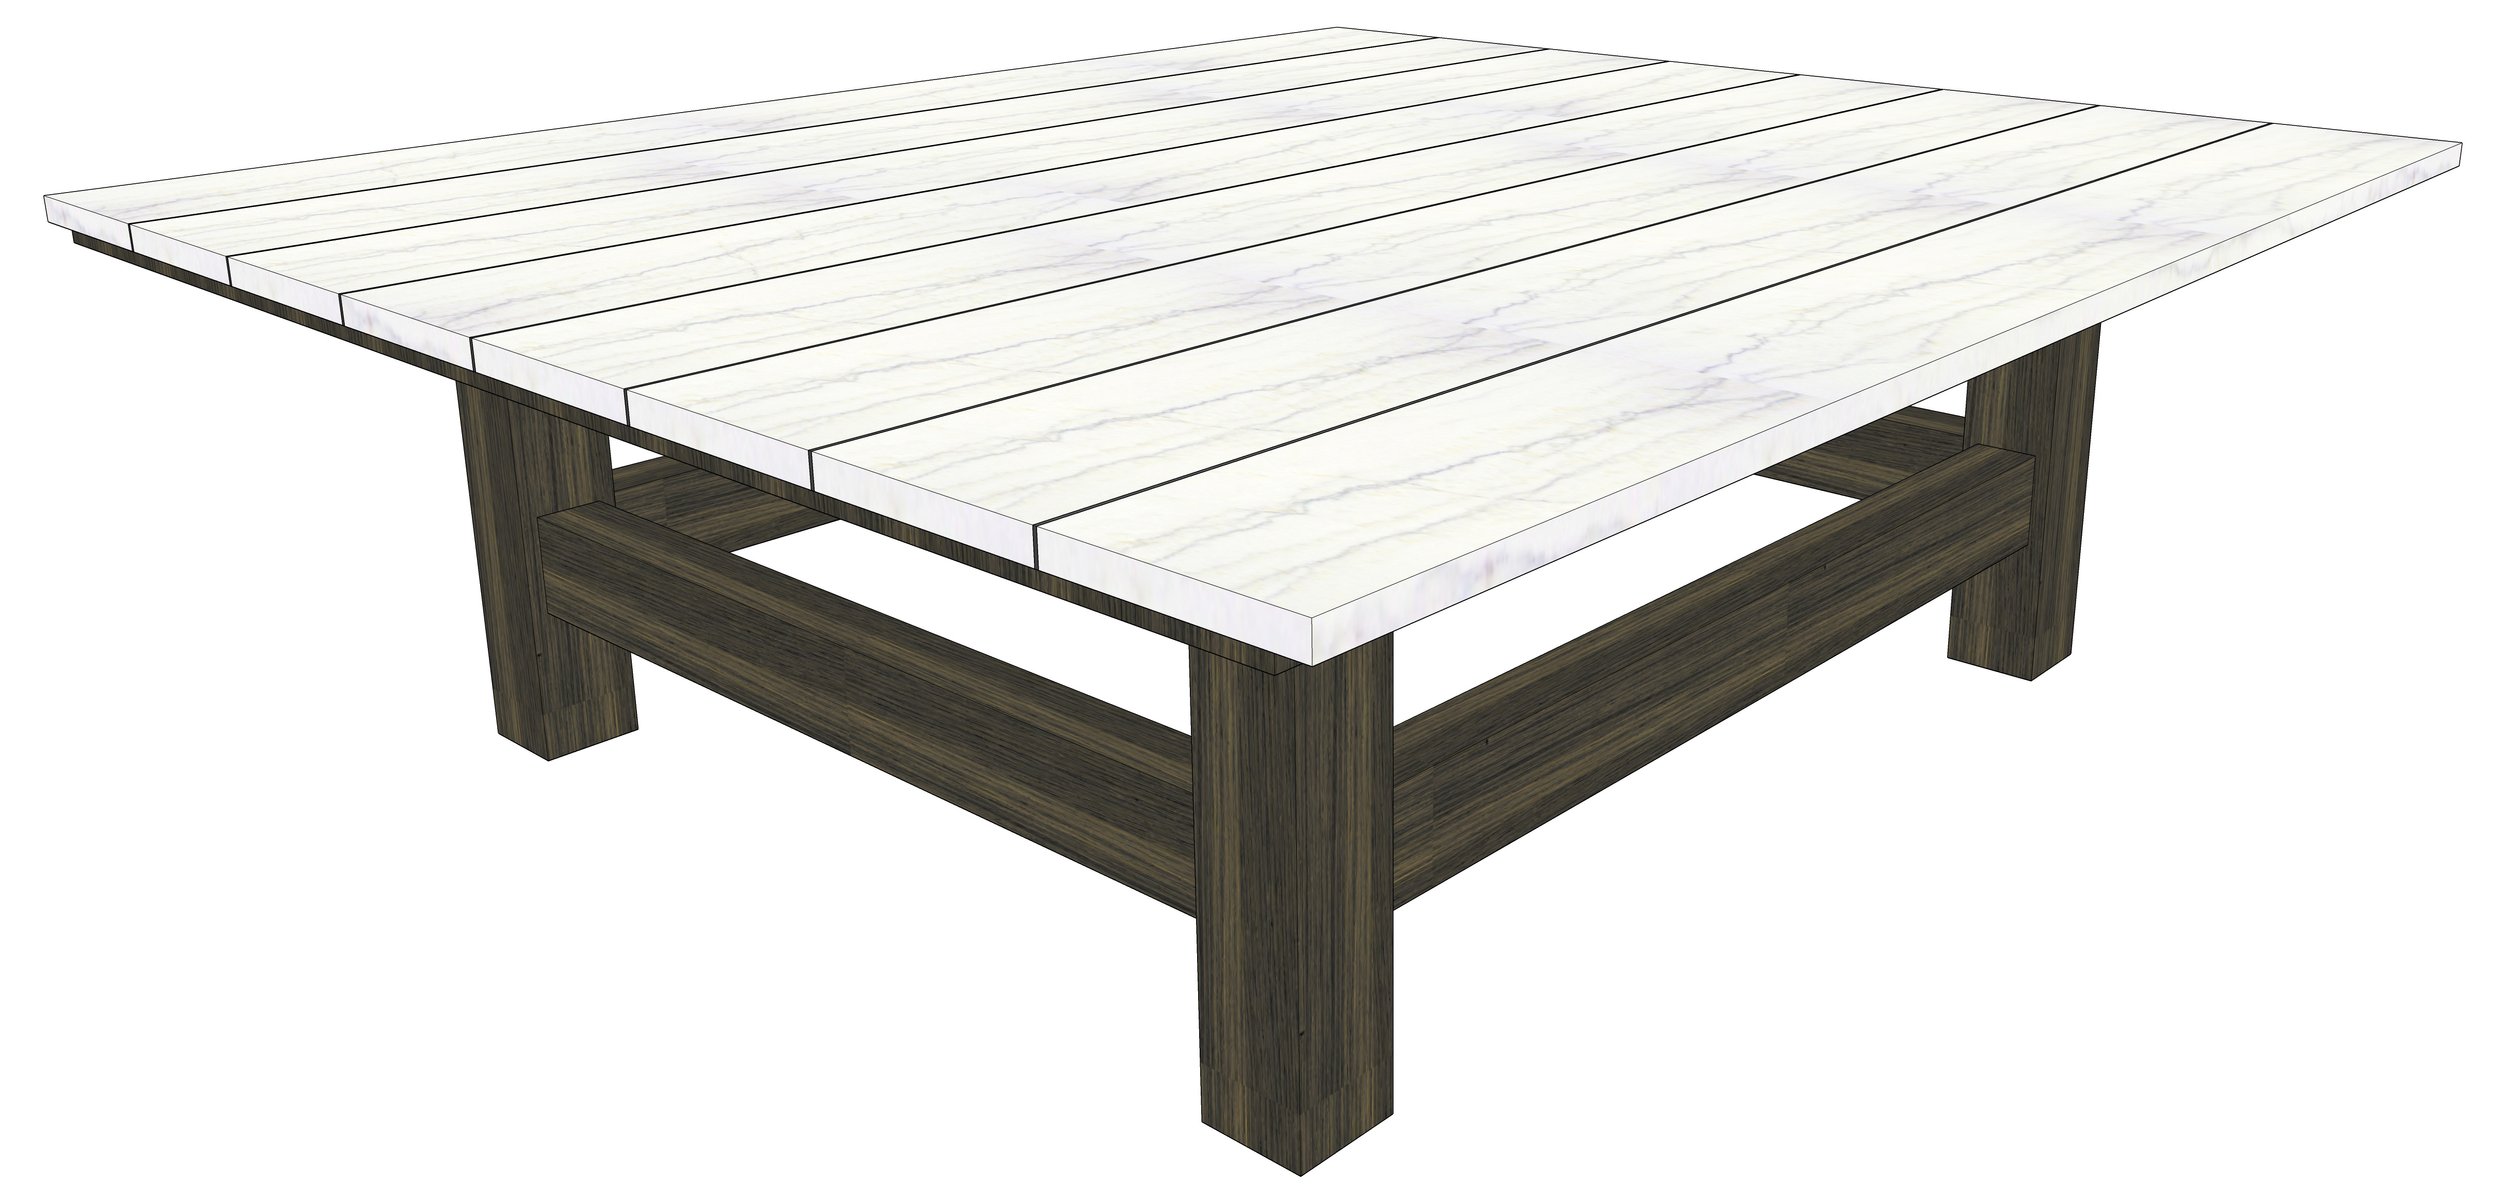 SkB - Product - Furniture - McKinsey Cafe Table -3.jpg